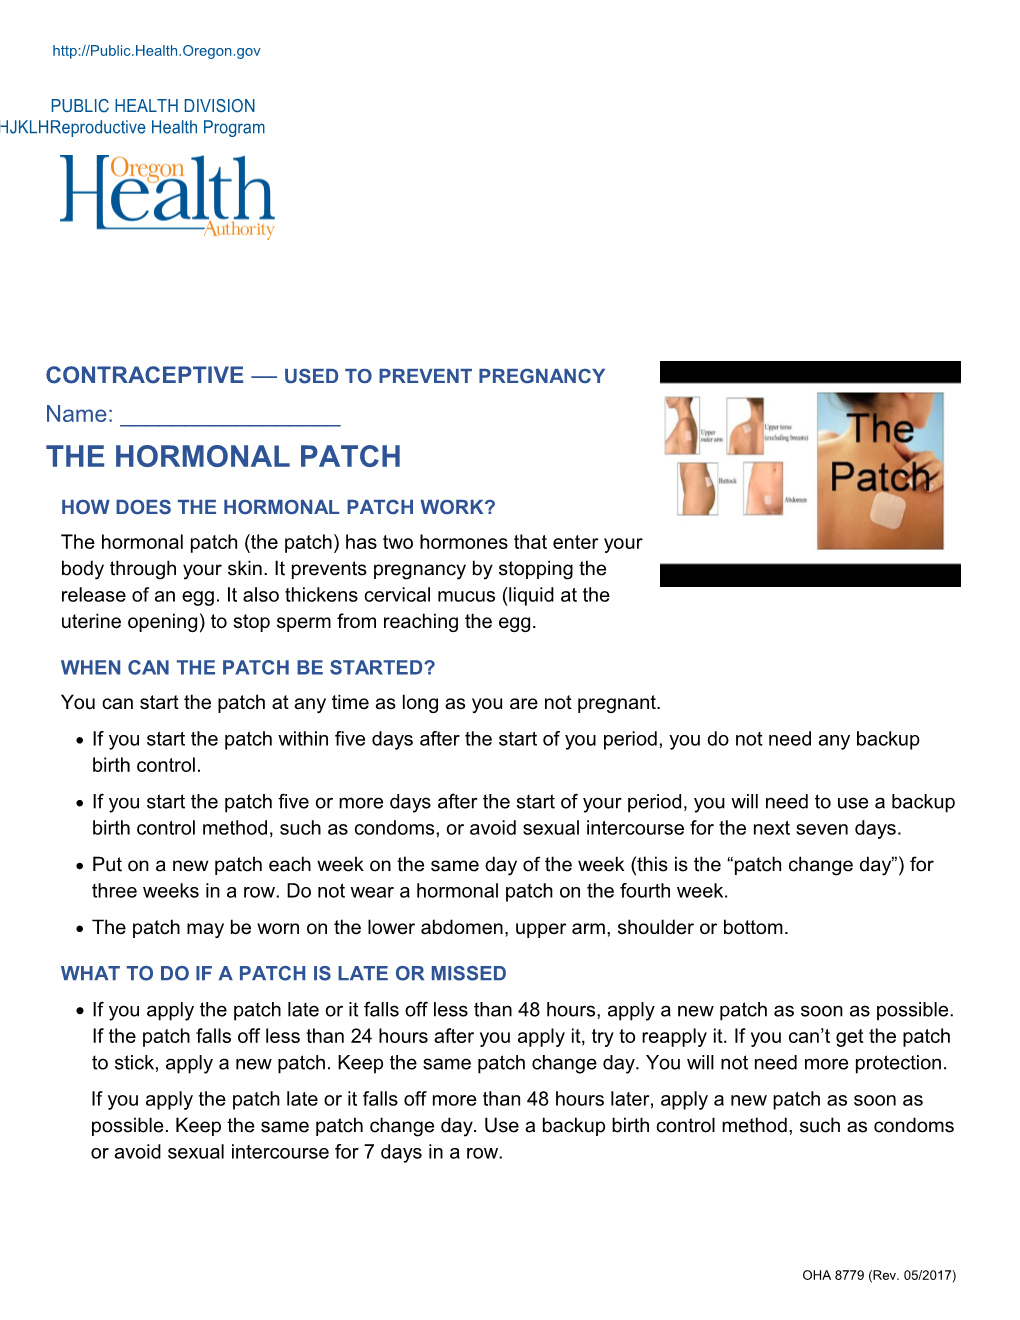 Patch Medication Information Sheet